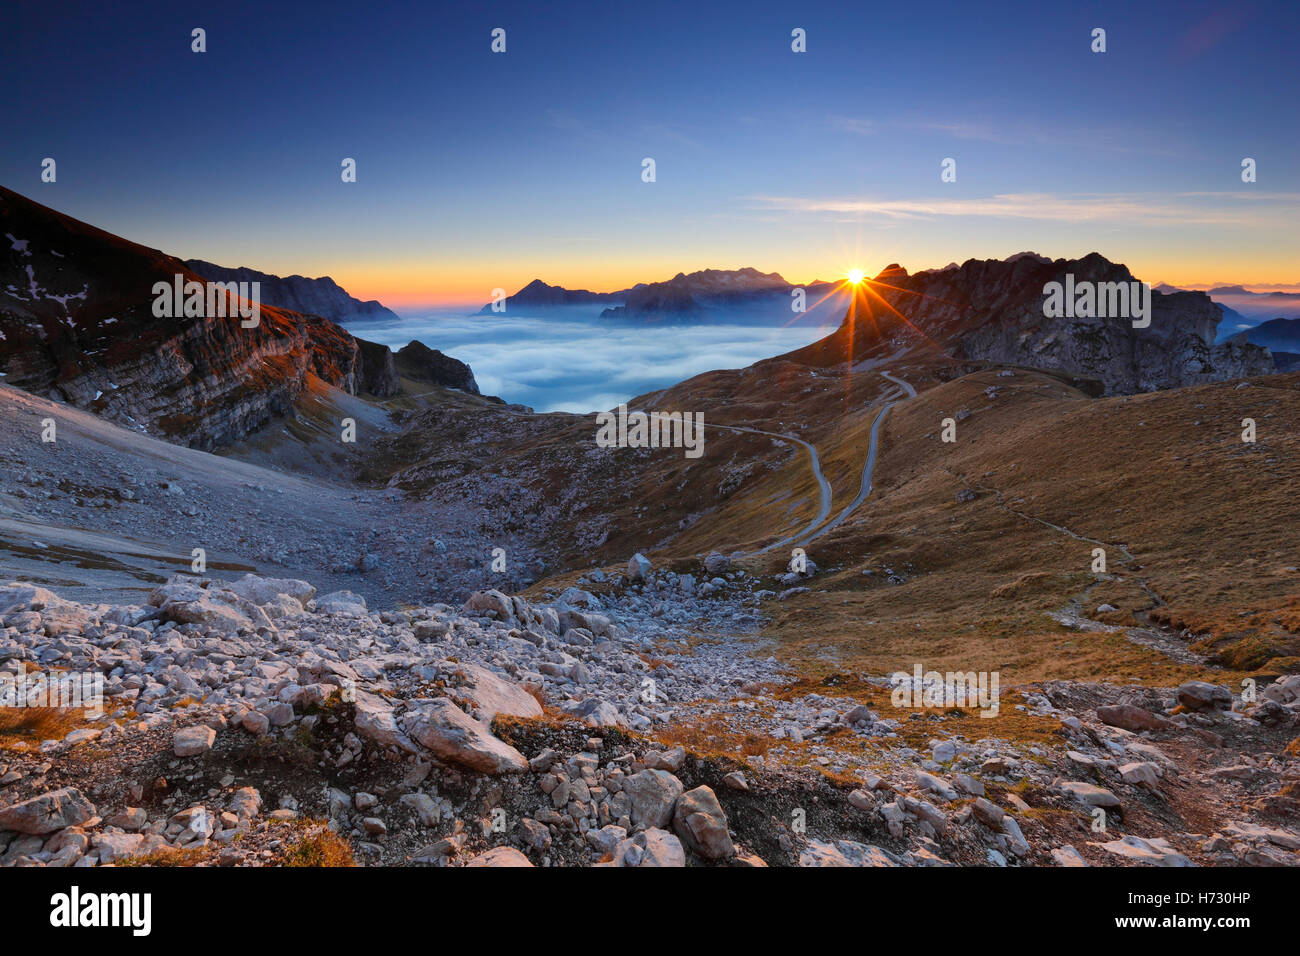 Sonnenuntergang am Horizont in italienischen Alpen Stockfoto